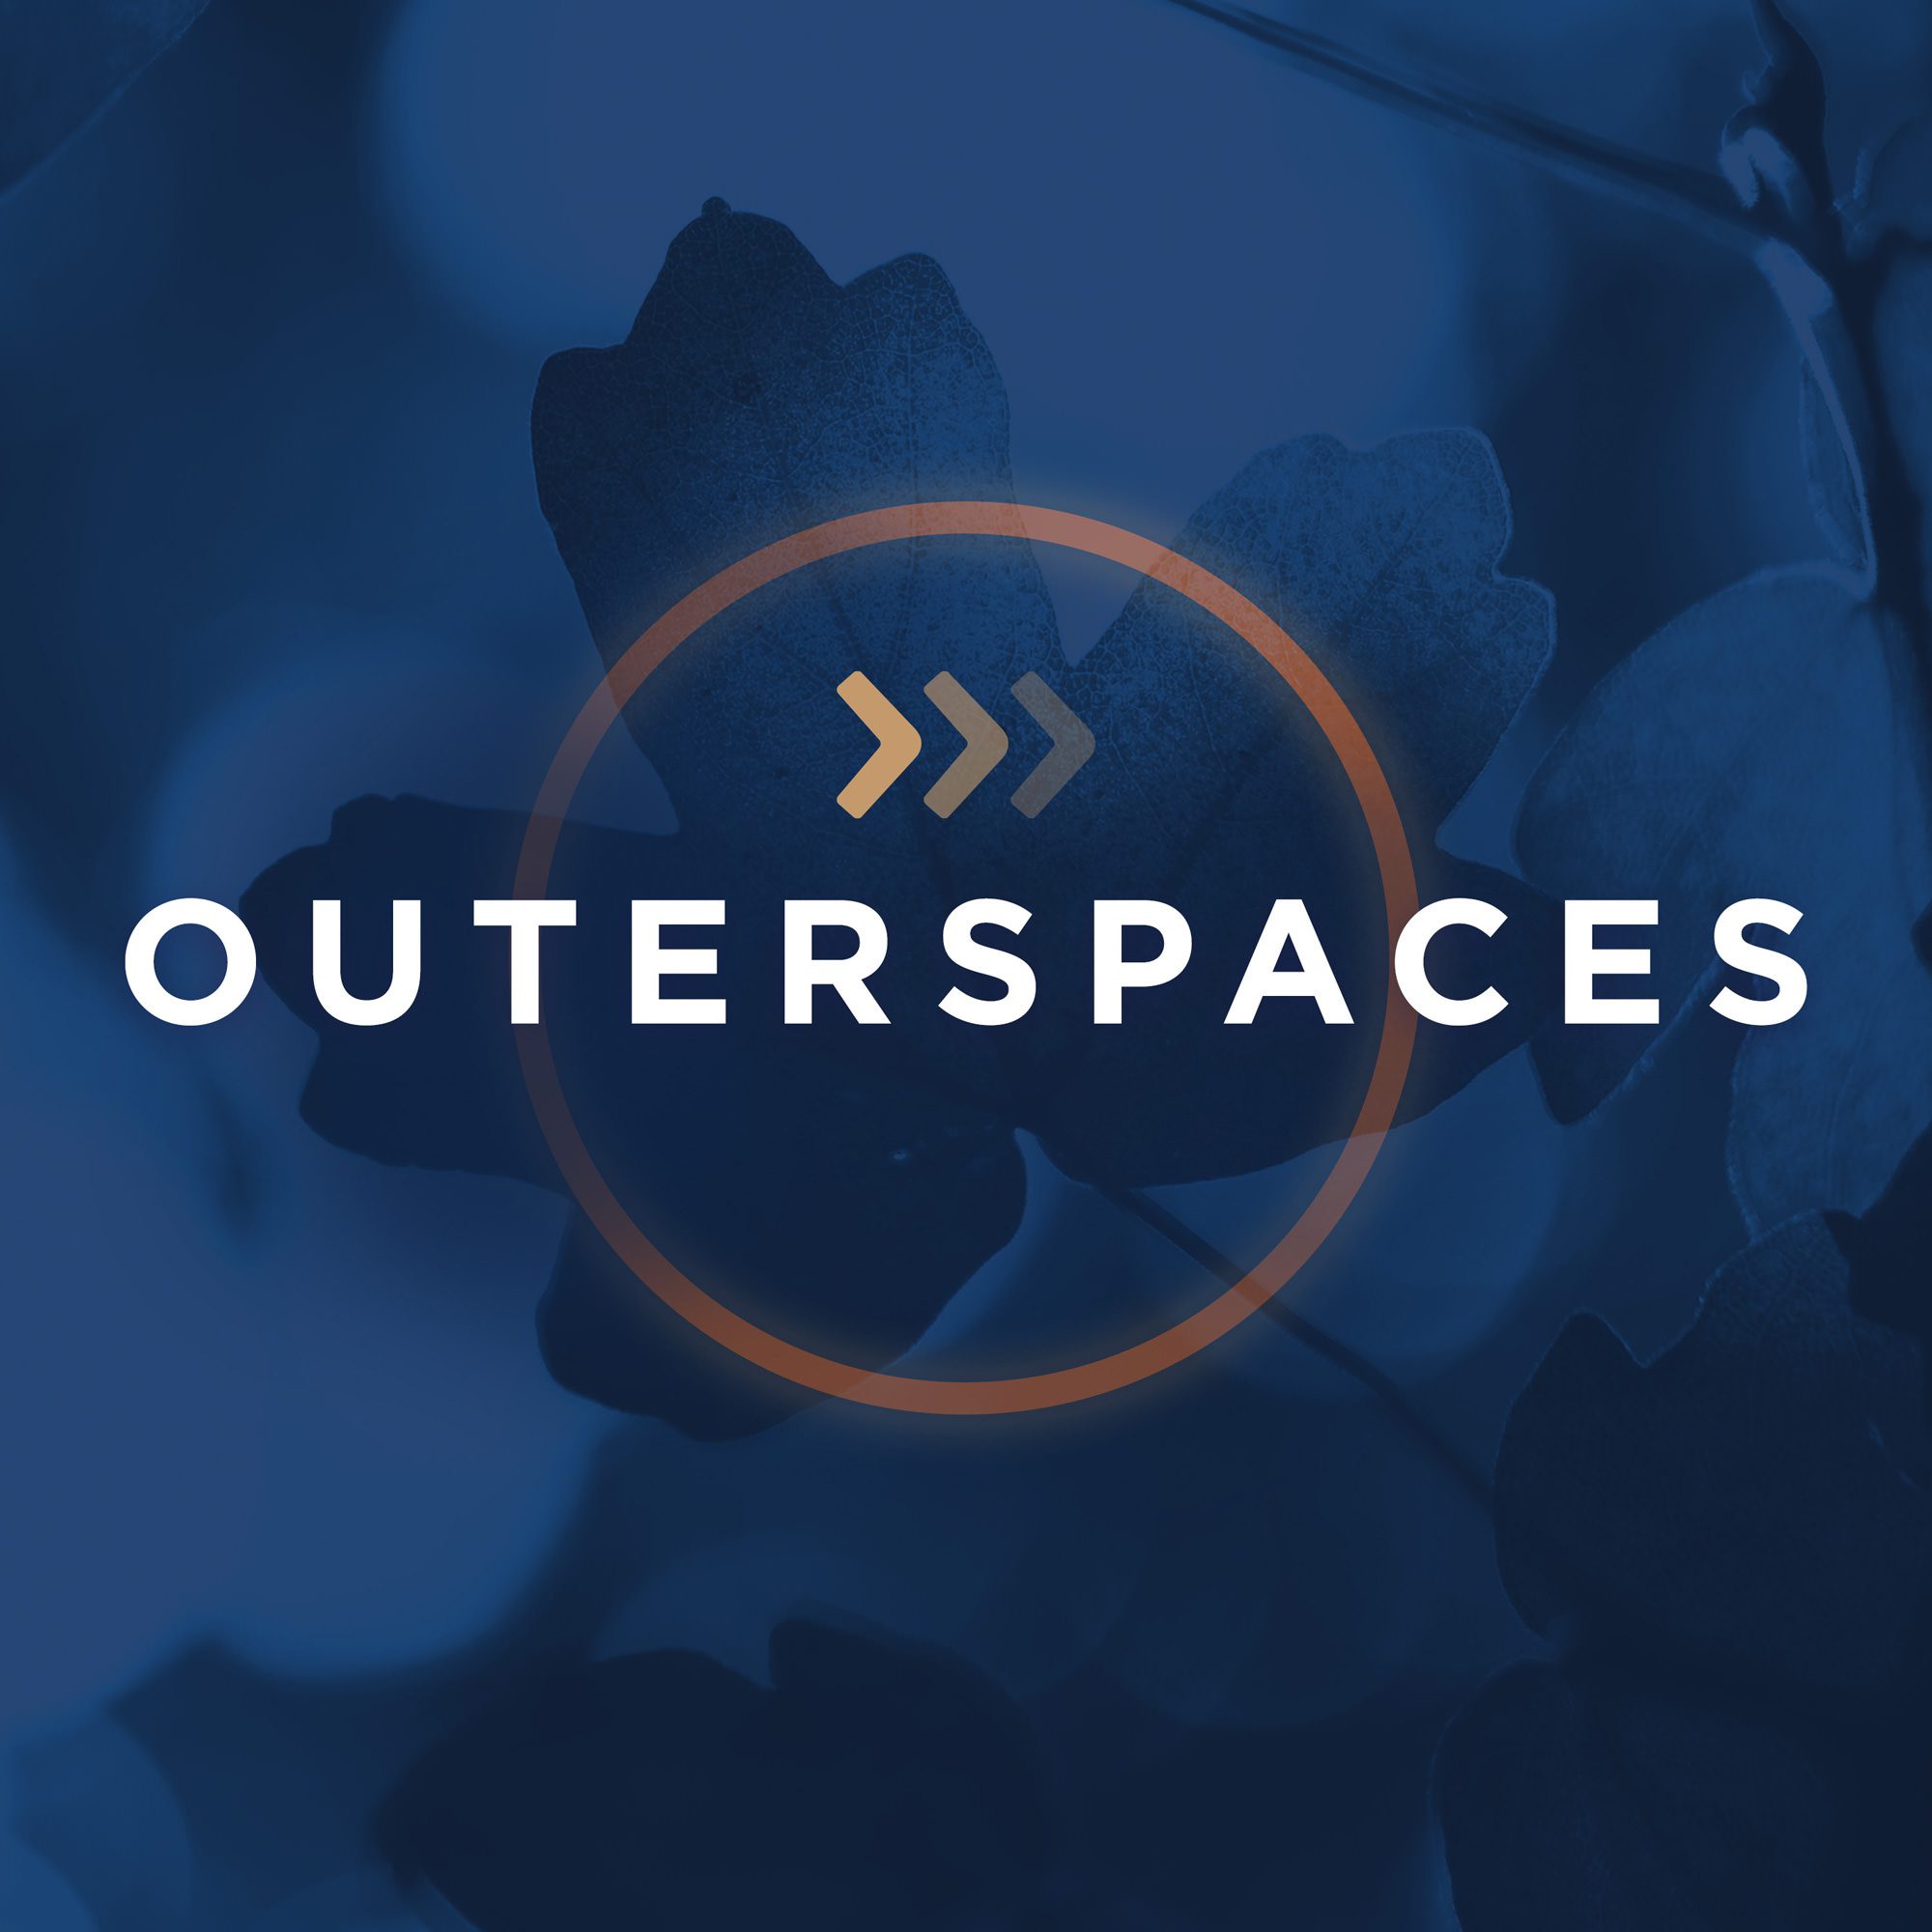 https://landscapersguide.com/wp-content/uploads/2022/02/outerspaces.jpg